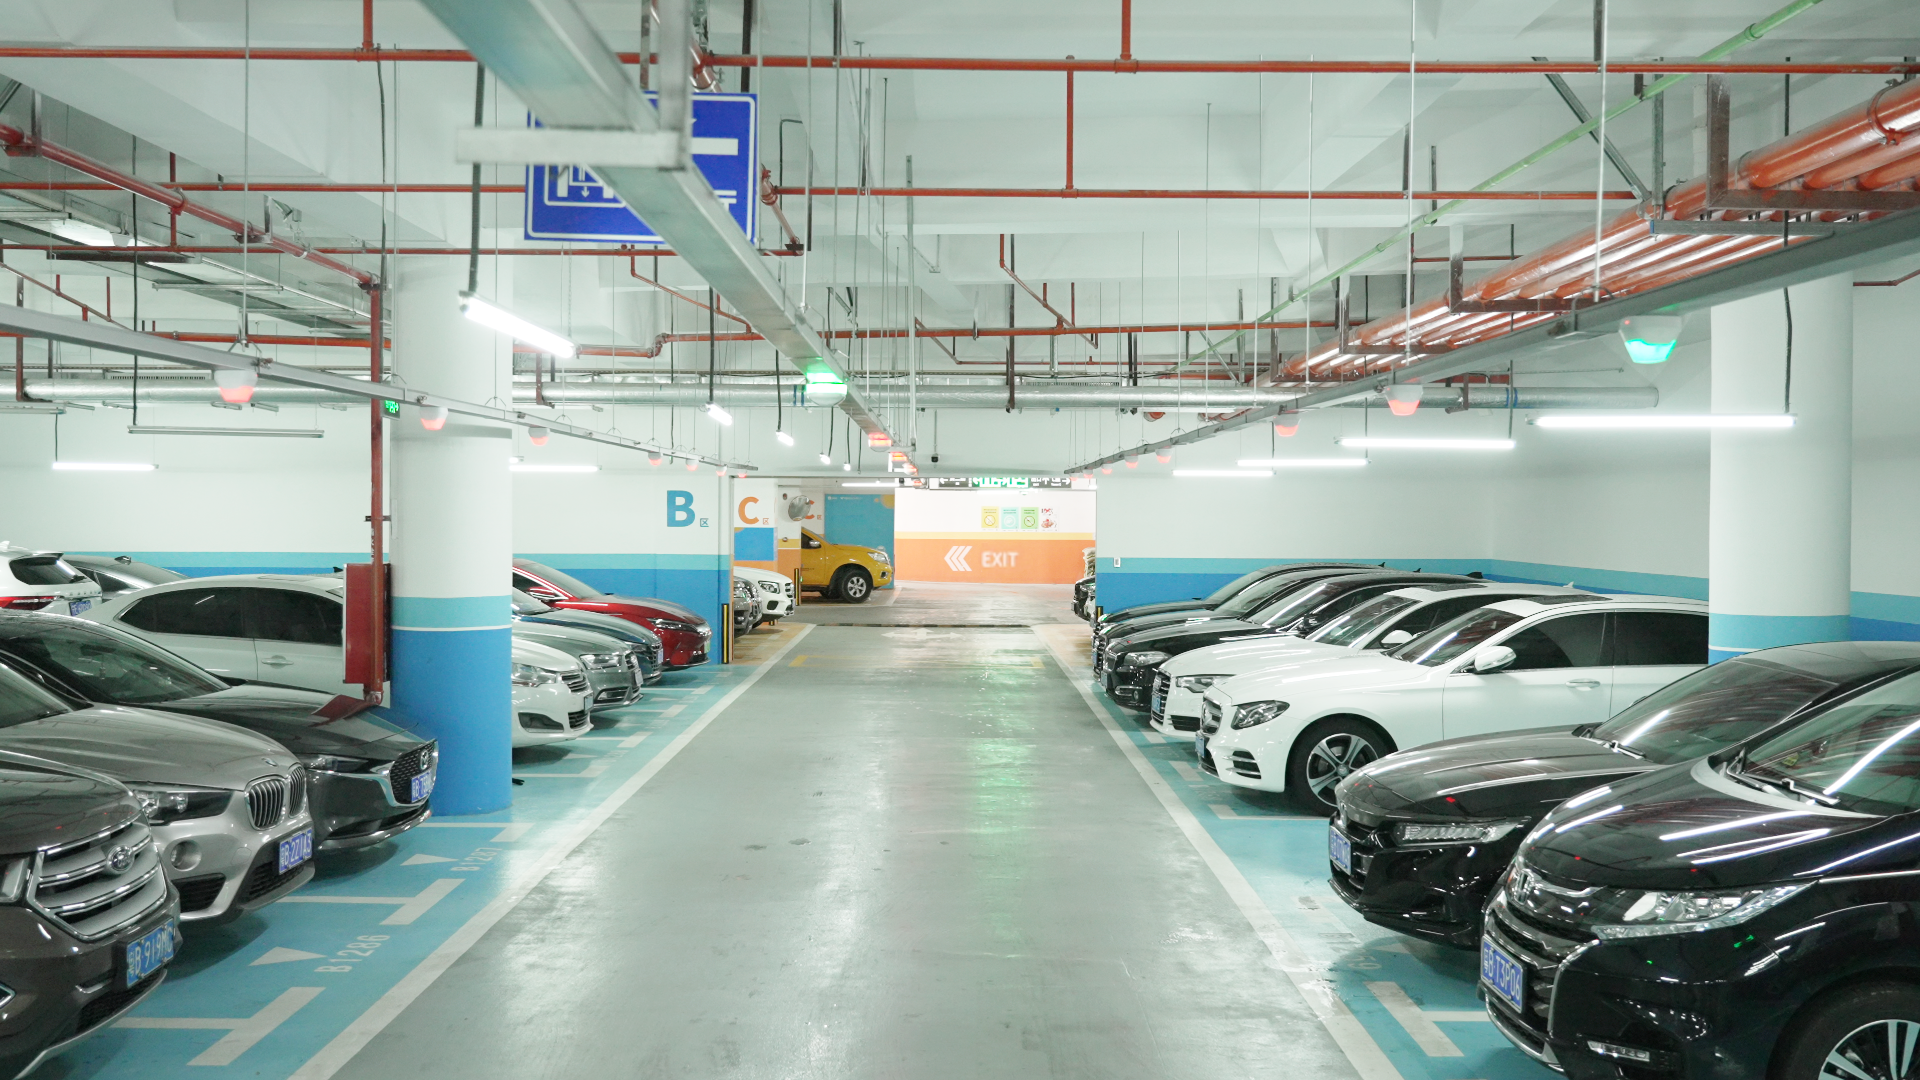 Jieshun launches the brand-new ultrasonic parking sensor 